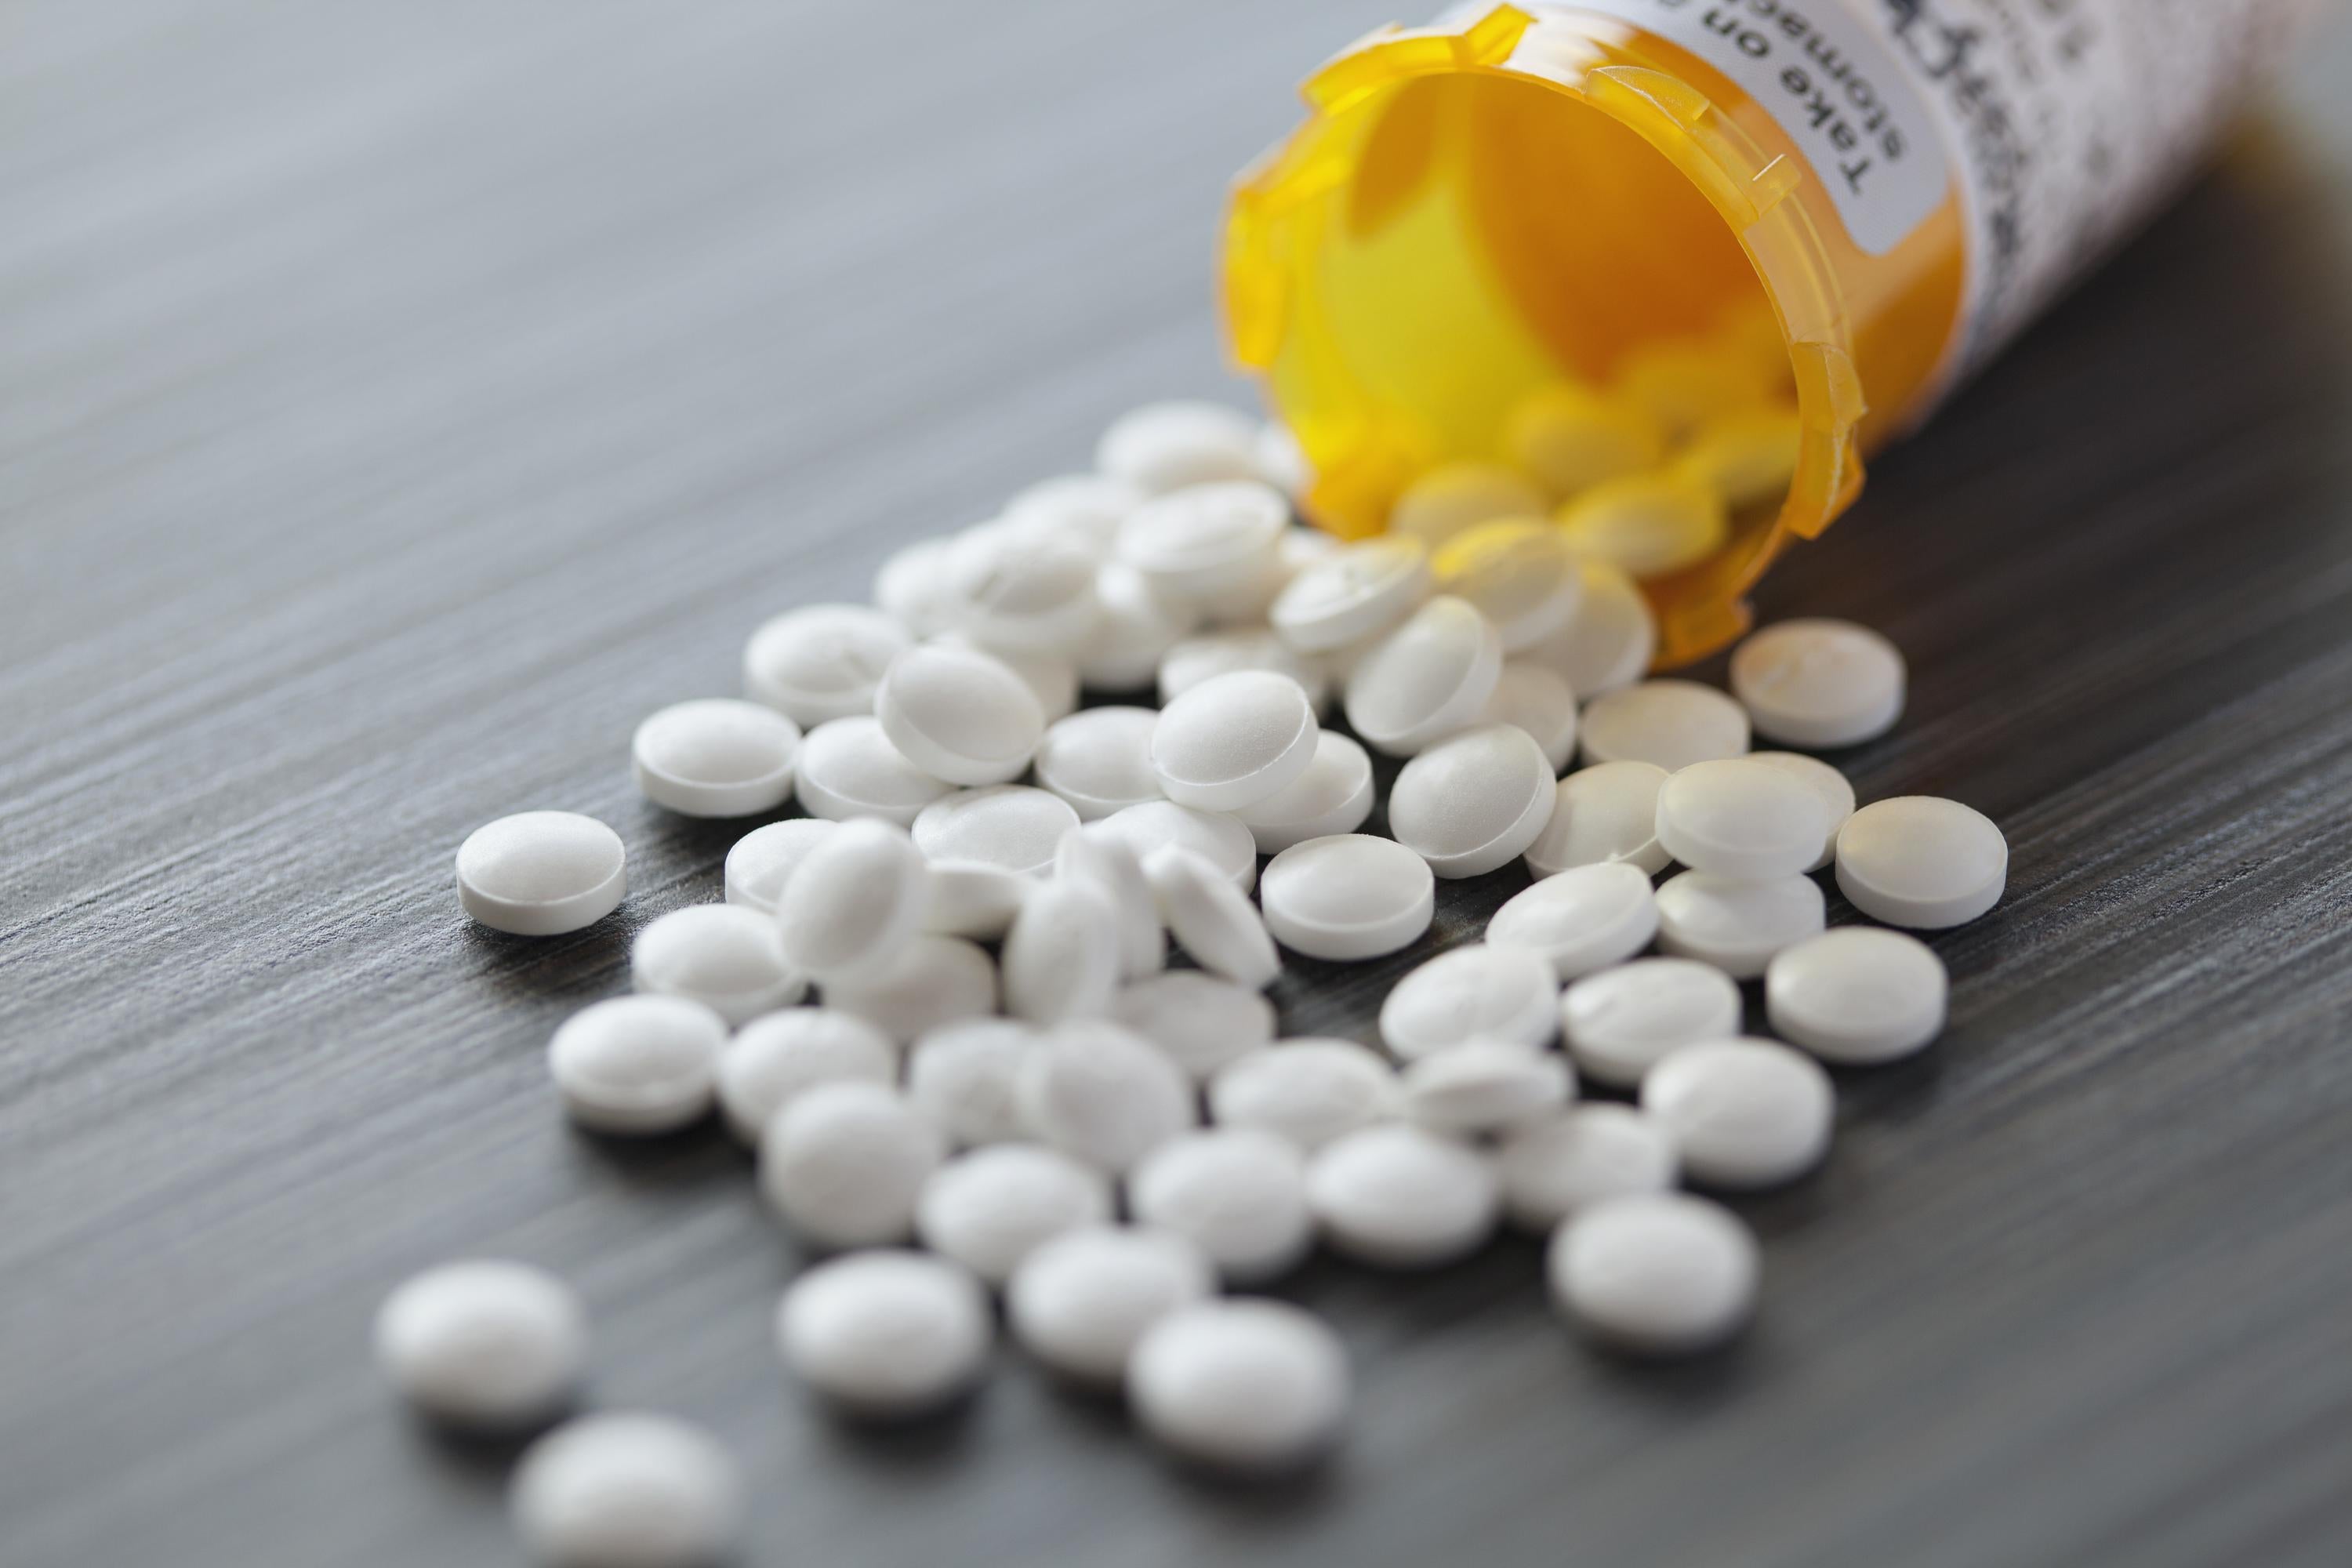 Talks needed on decriminalizing hard drugs to address opioid crisis, Tam says